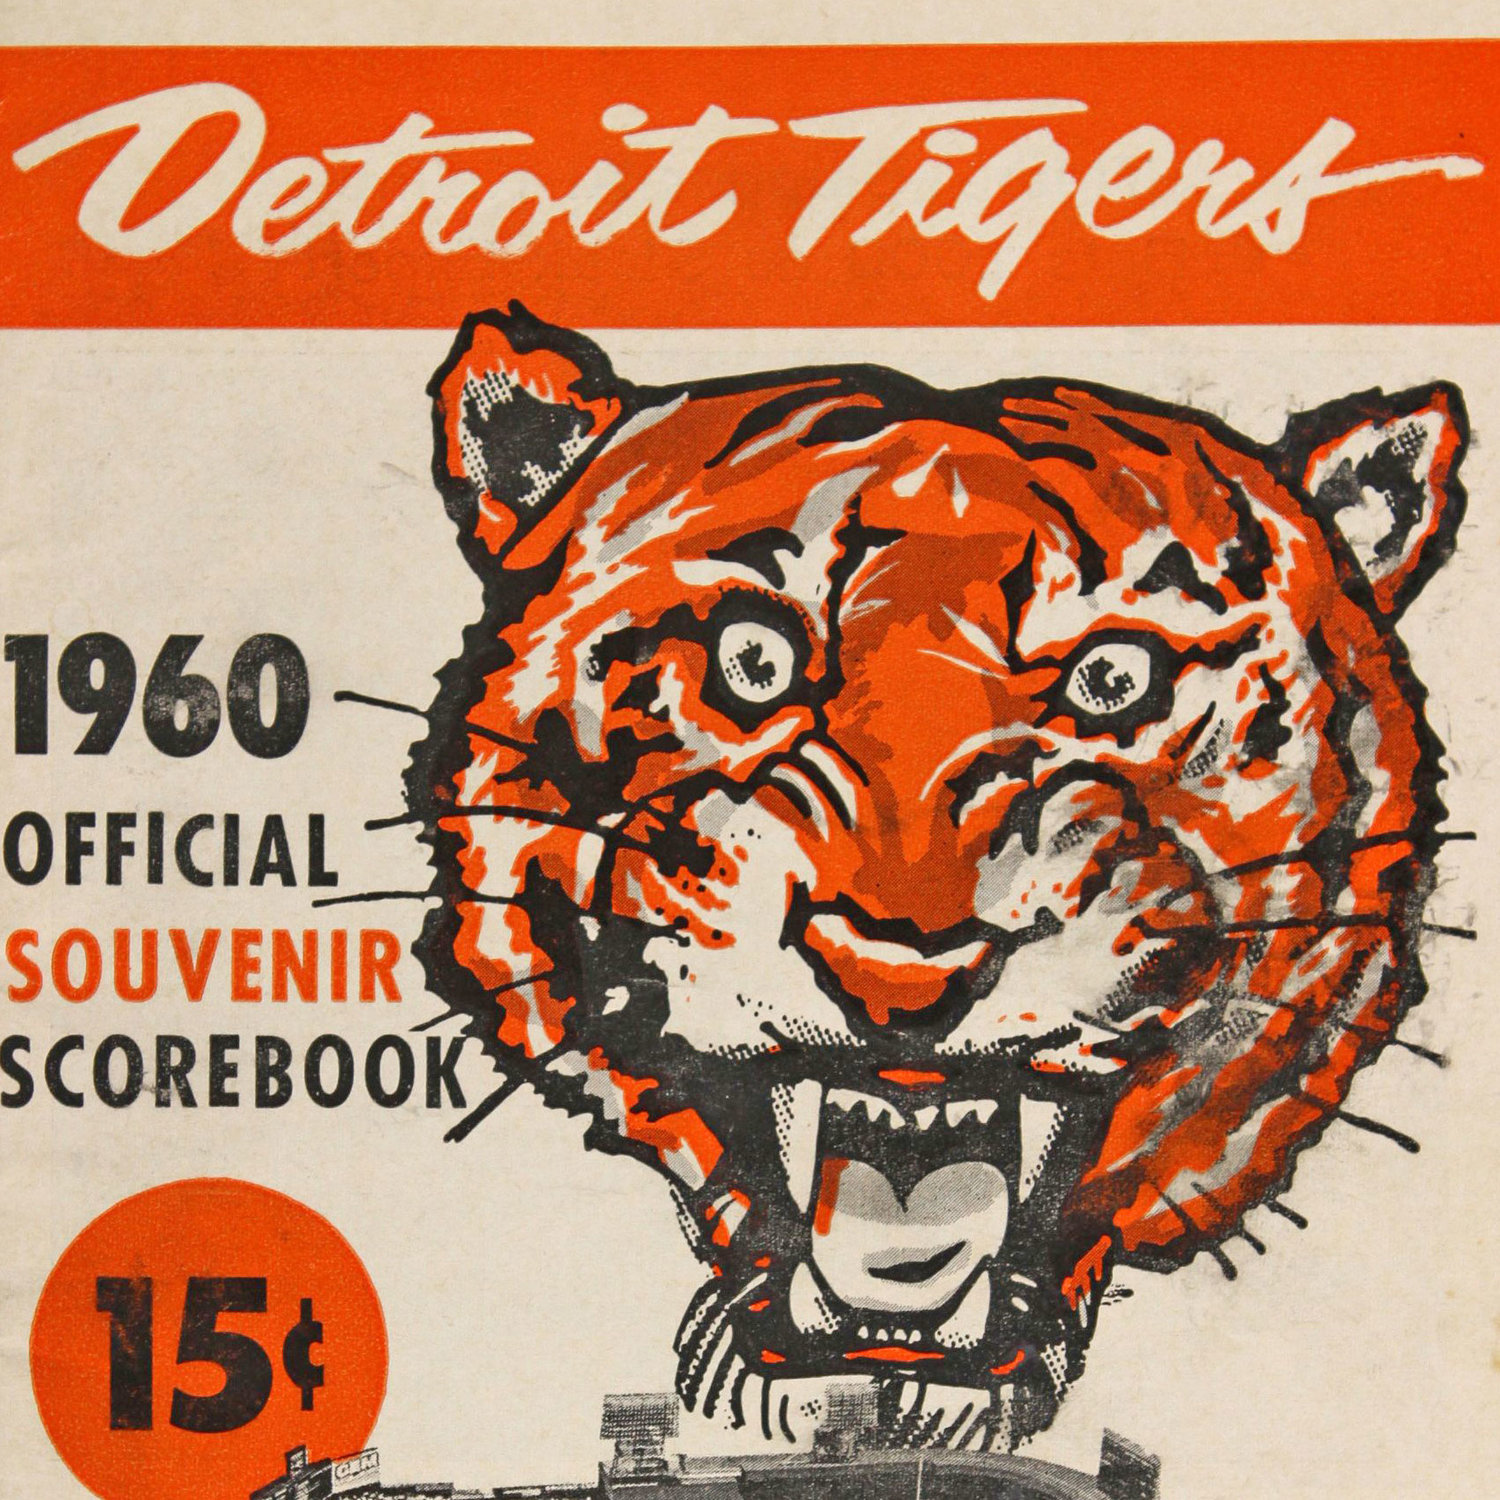 D-troit: Tigers Finally Achieve Uniformity on Their Uniforms